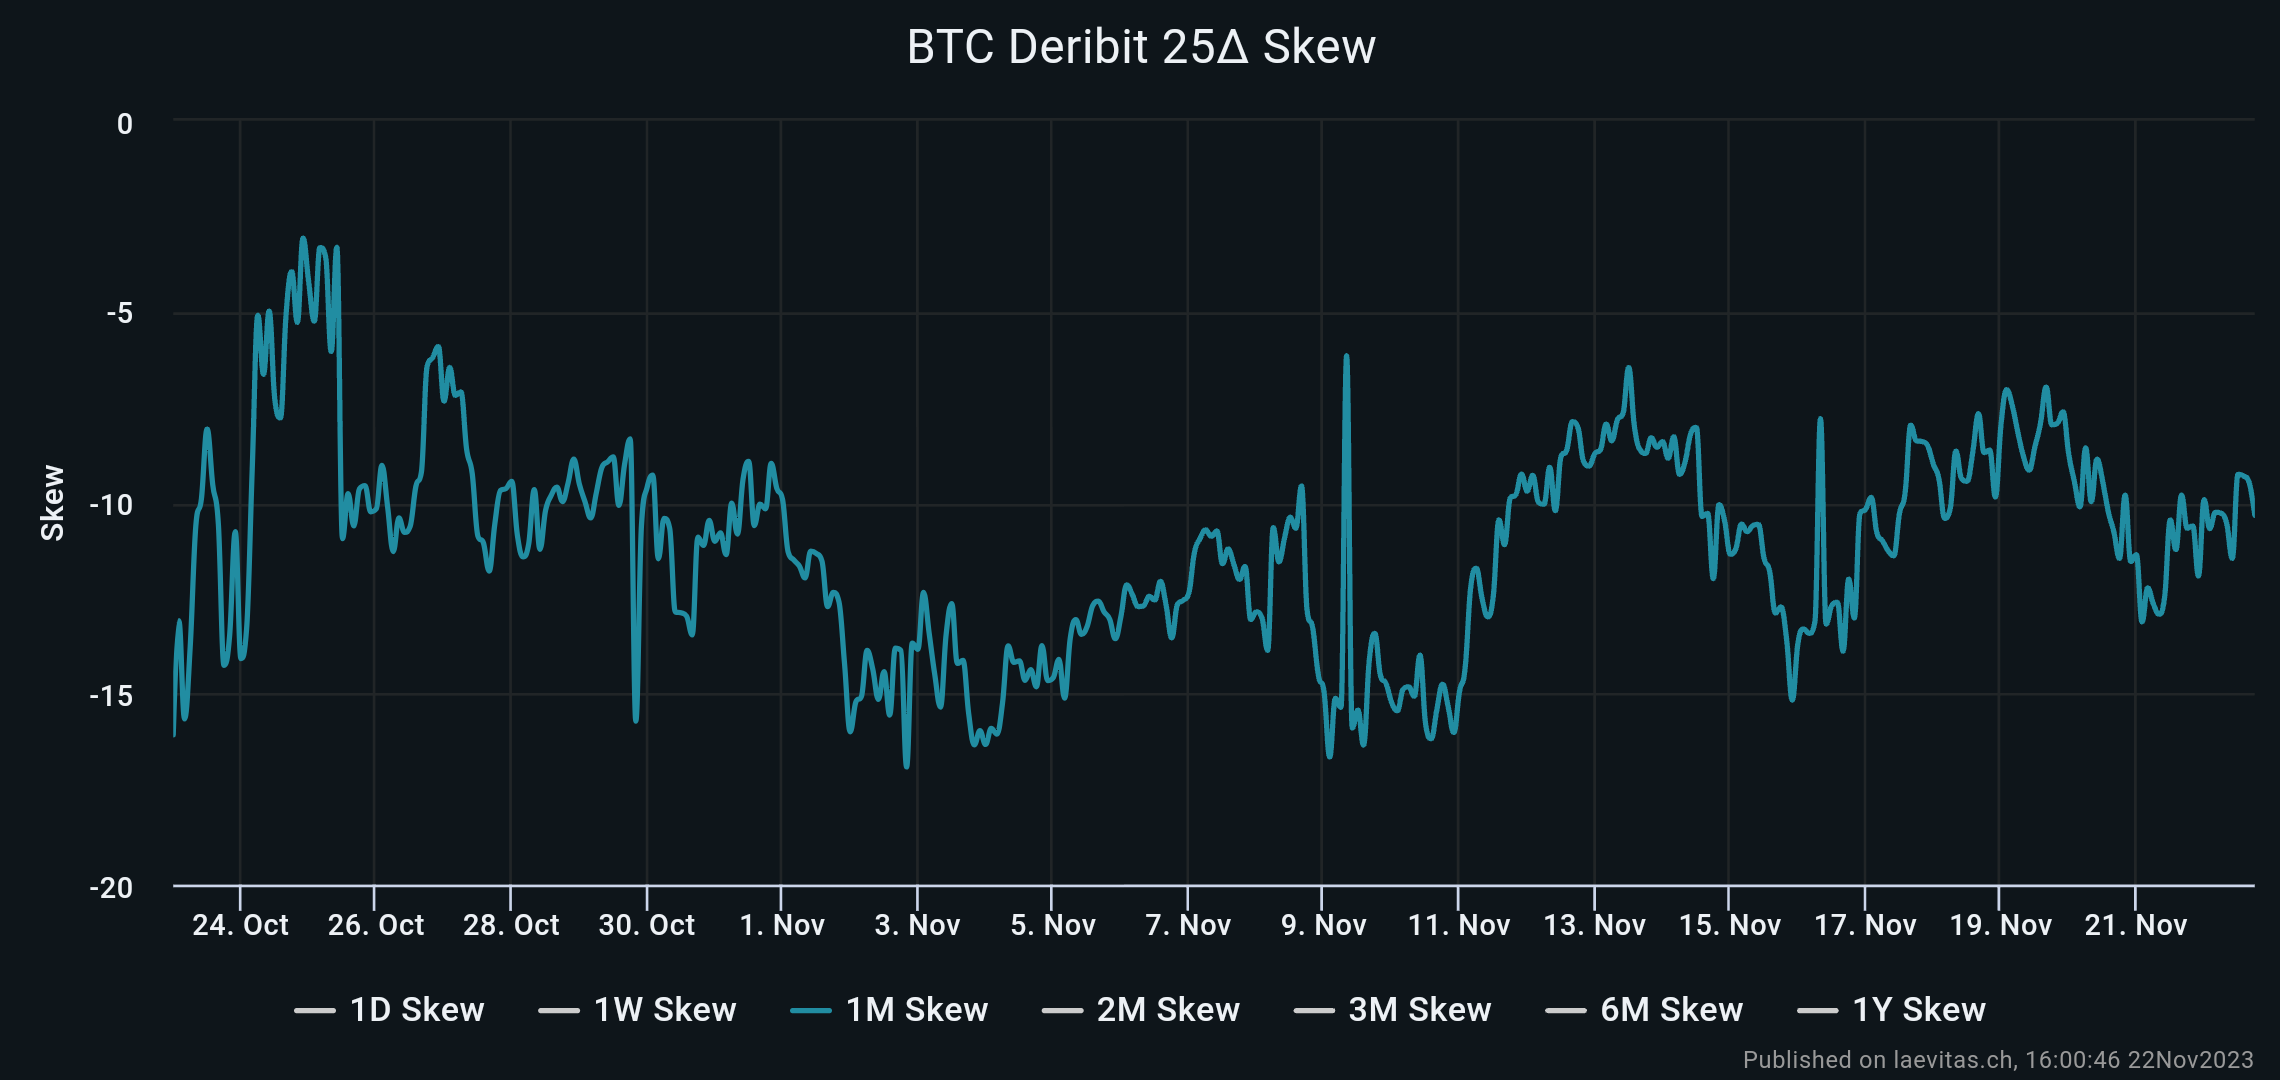 Bitcoin Derivative Traders Eyeing $40,000 after Binance Settlement